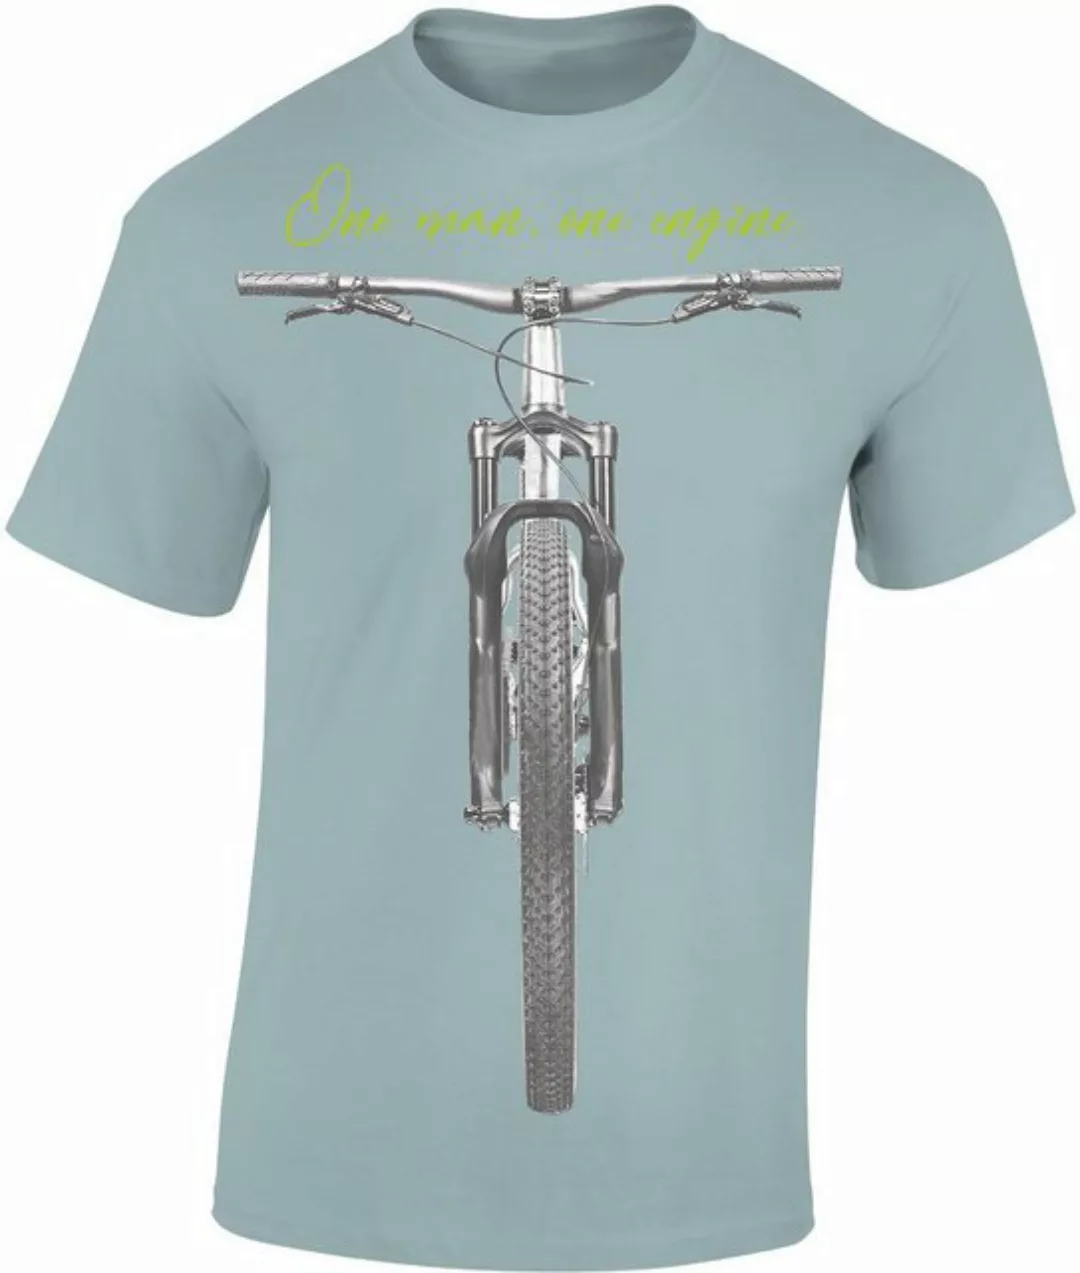 Baddery Print-Shirt Fahrrad T-Shirt : "One Man One Engine", hochwertiger Si günstig online kaufen